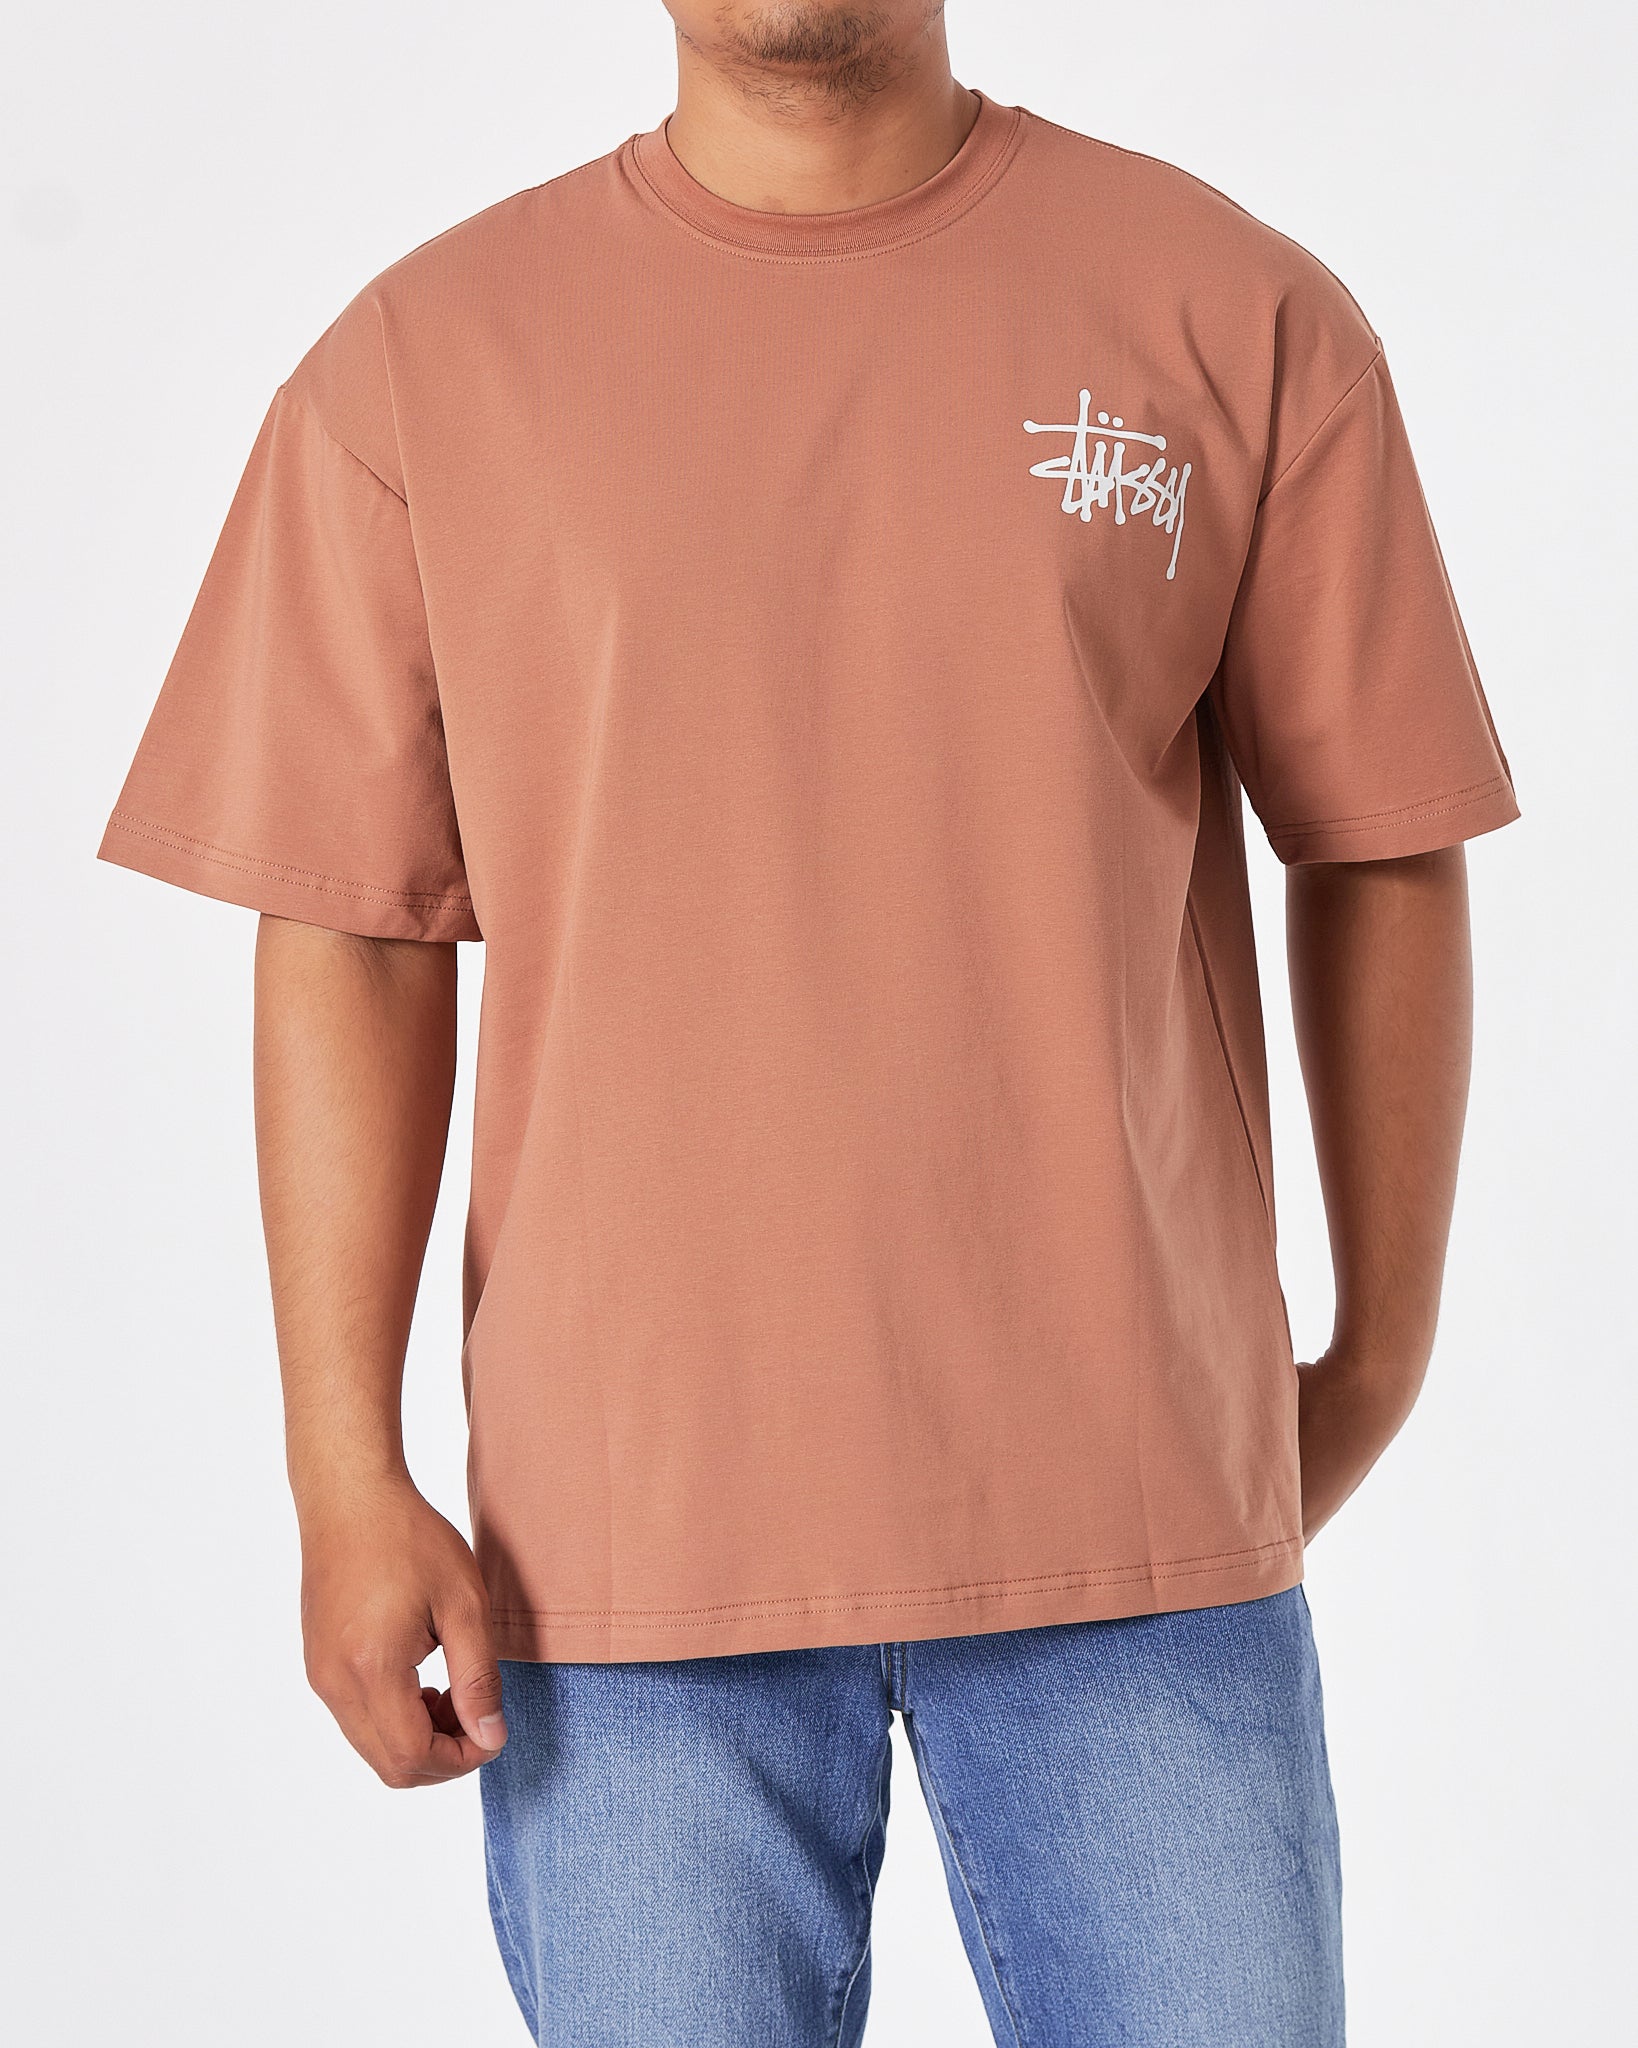 STU Front Back Logo Printed Men Brown T-Shirt 20.90